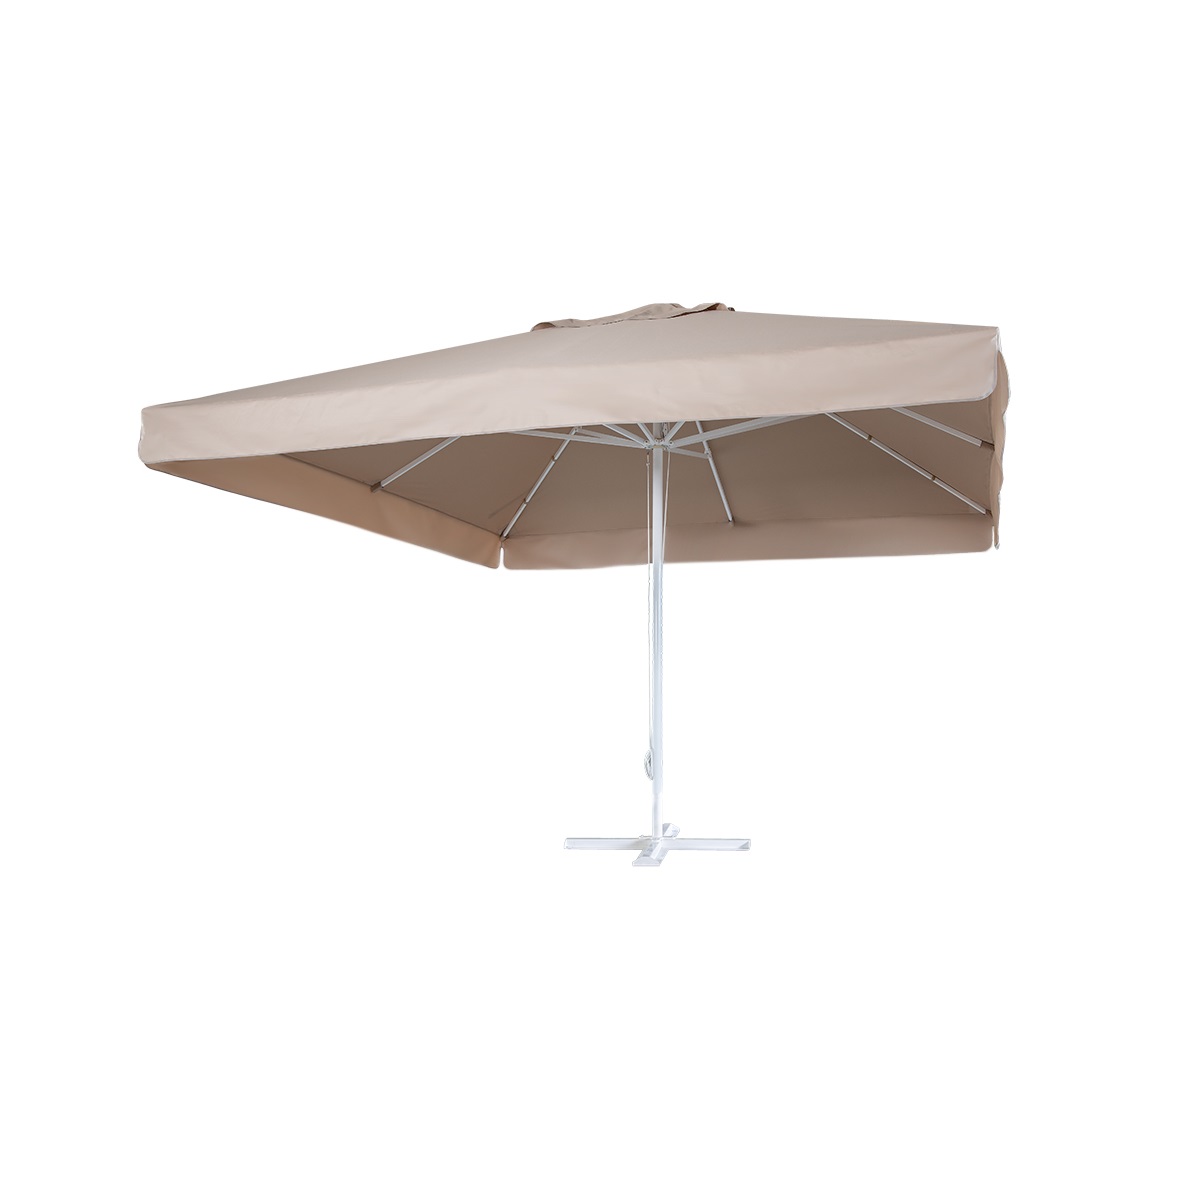 Зонт с центральной опорой 4,0х4,0 м, СТАНДАРТ 60 квадратный (Ткань Oxford 600D), бежевый 0